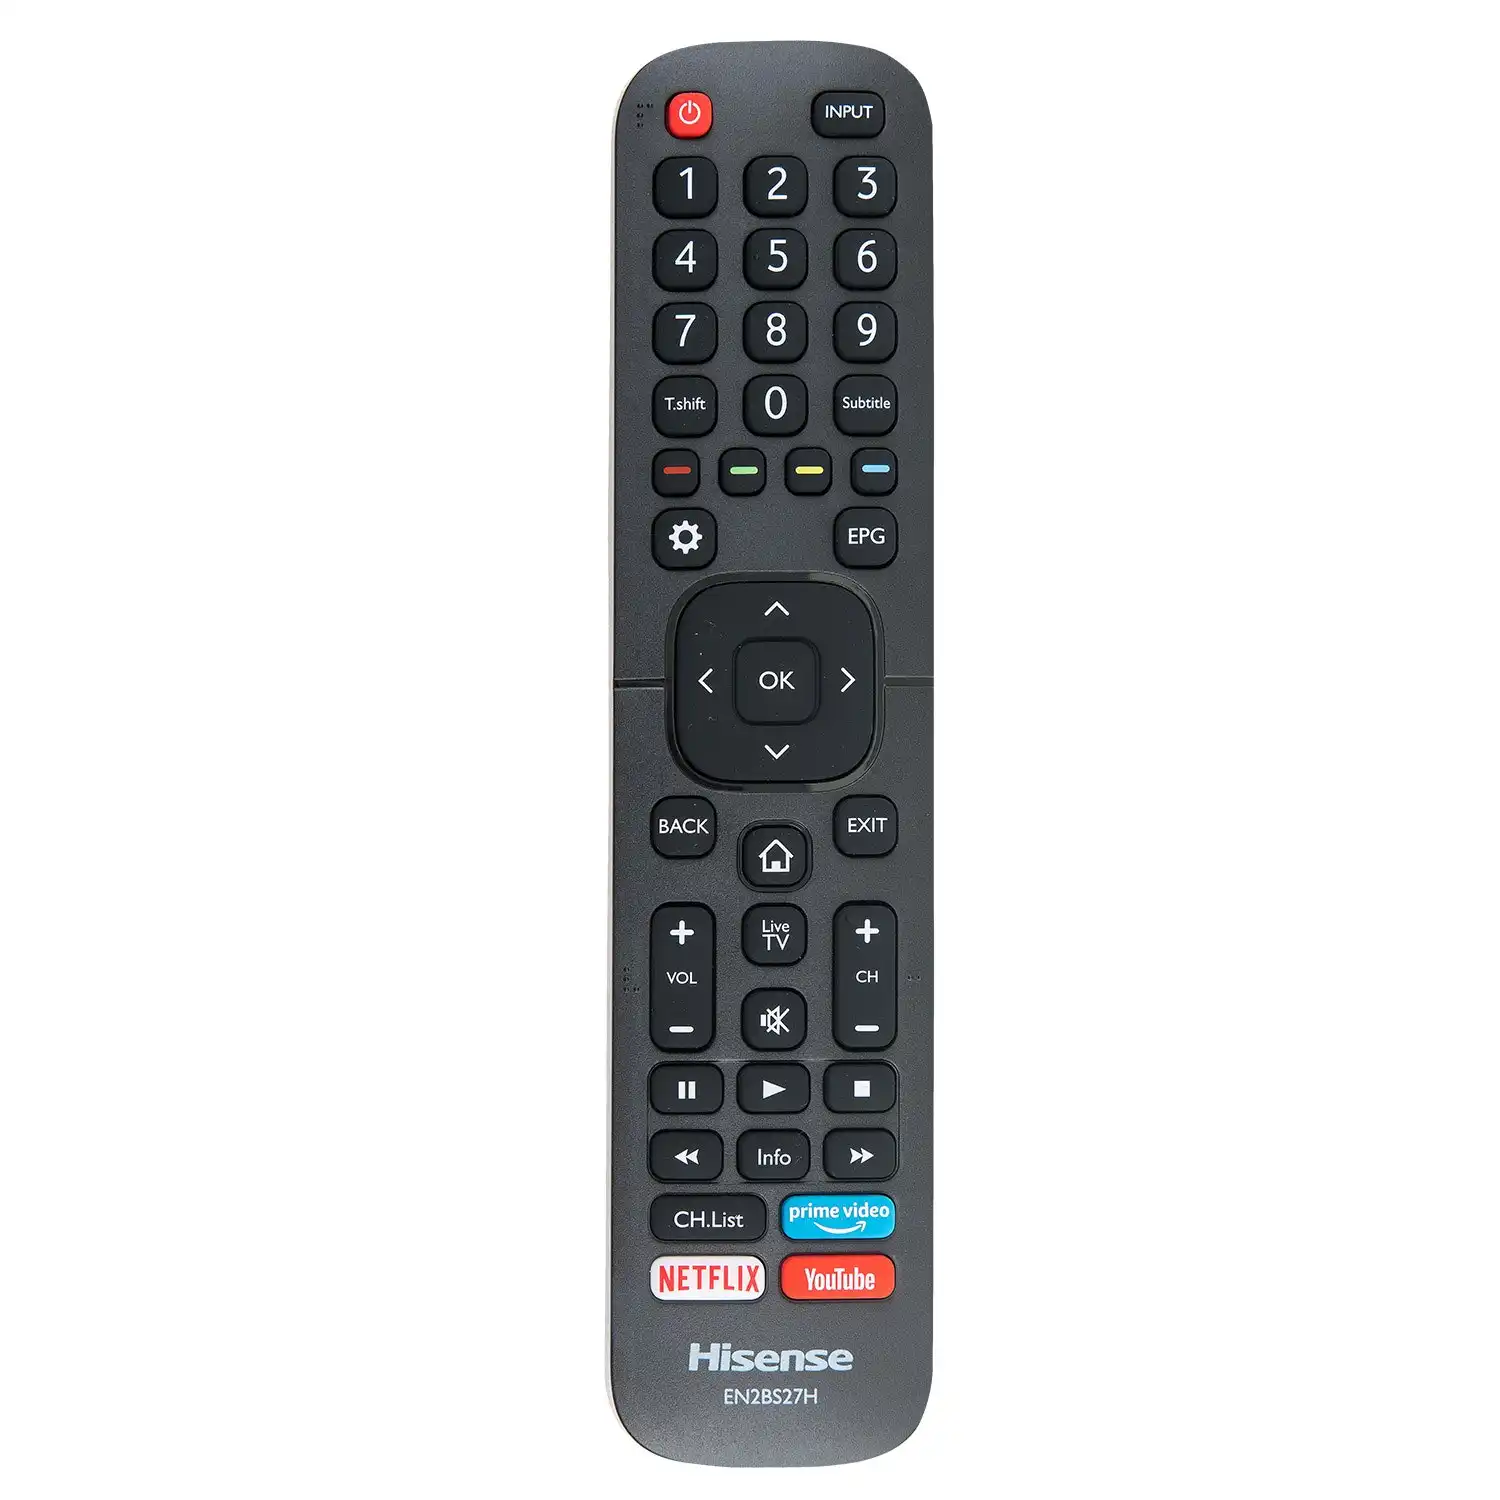 Genuine Hisense TV Remote Control T250554 EN2BS27H